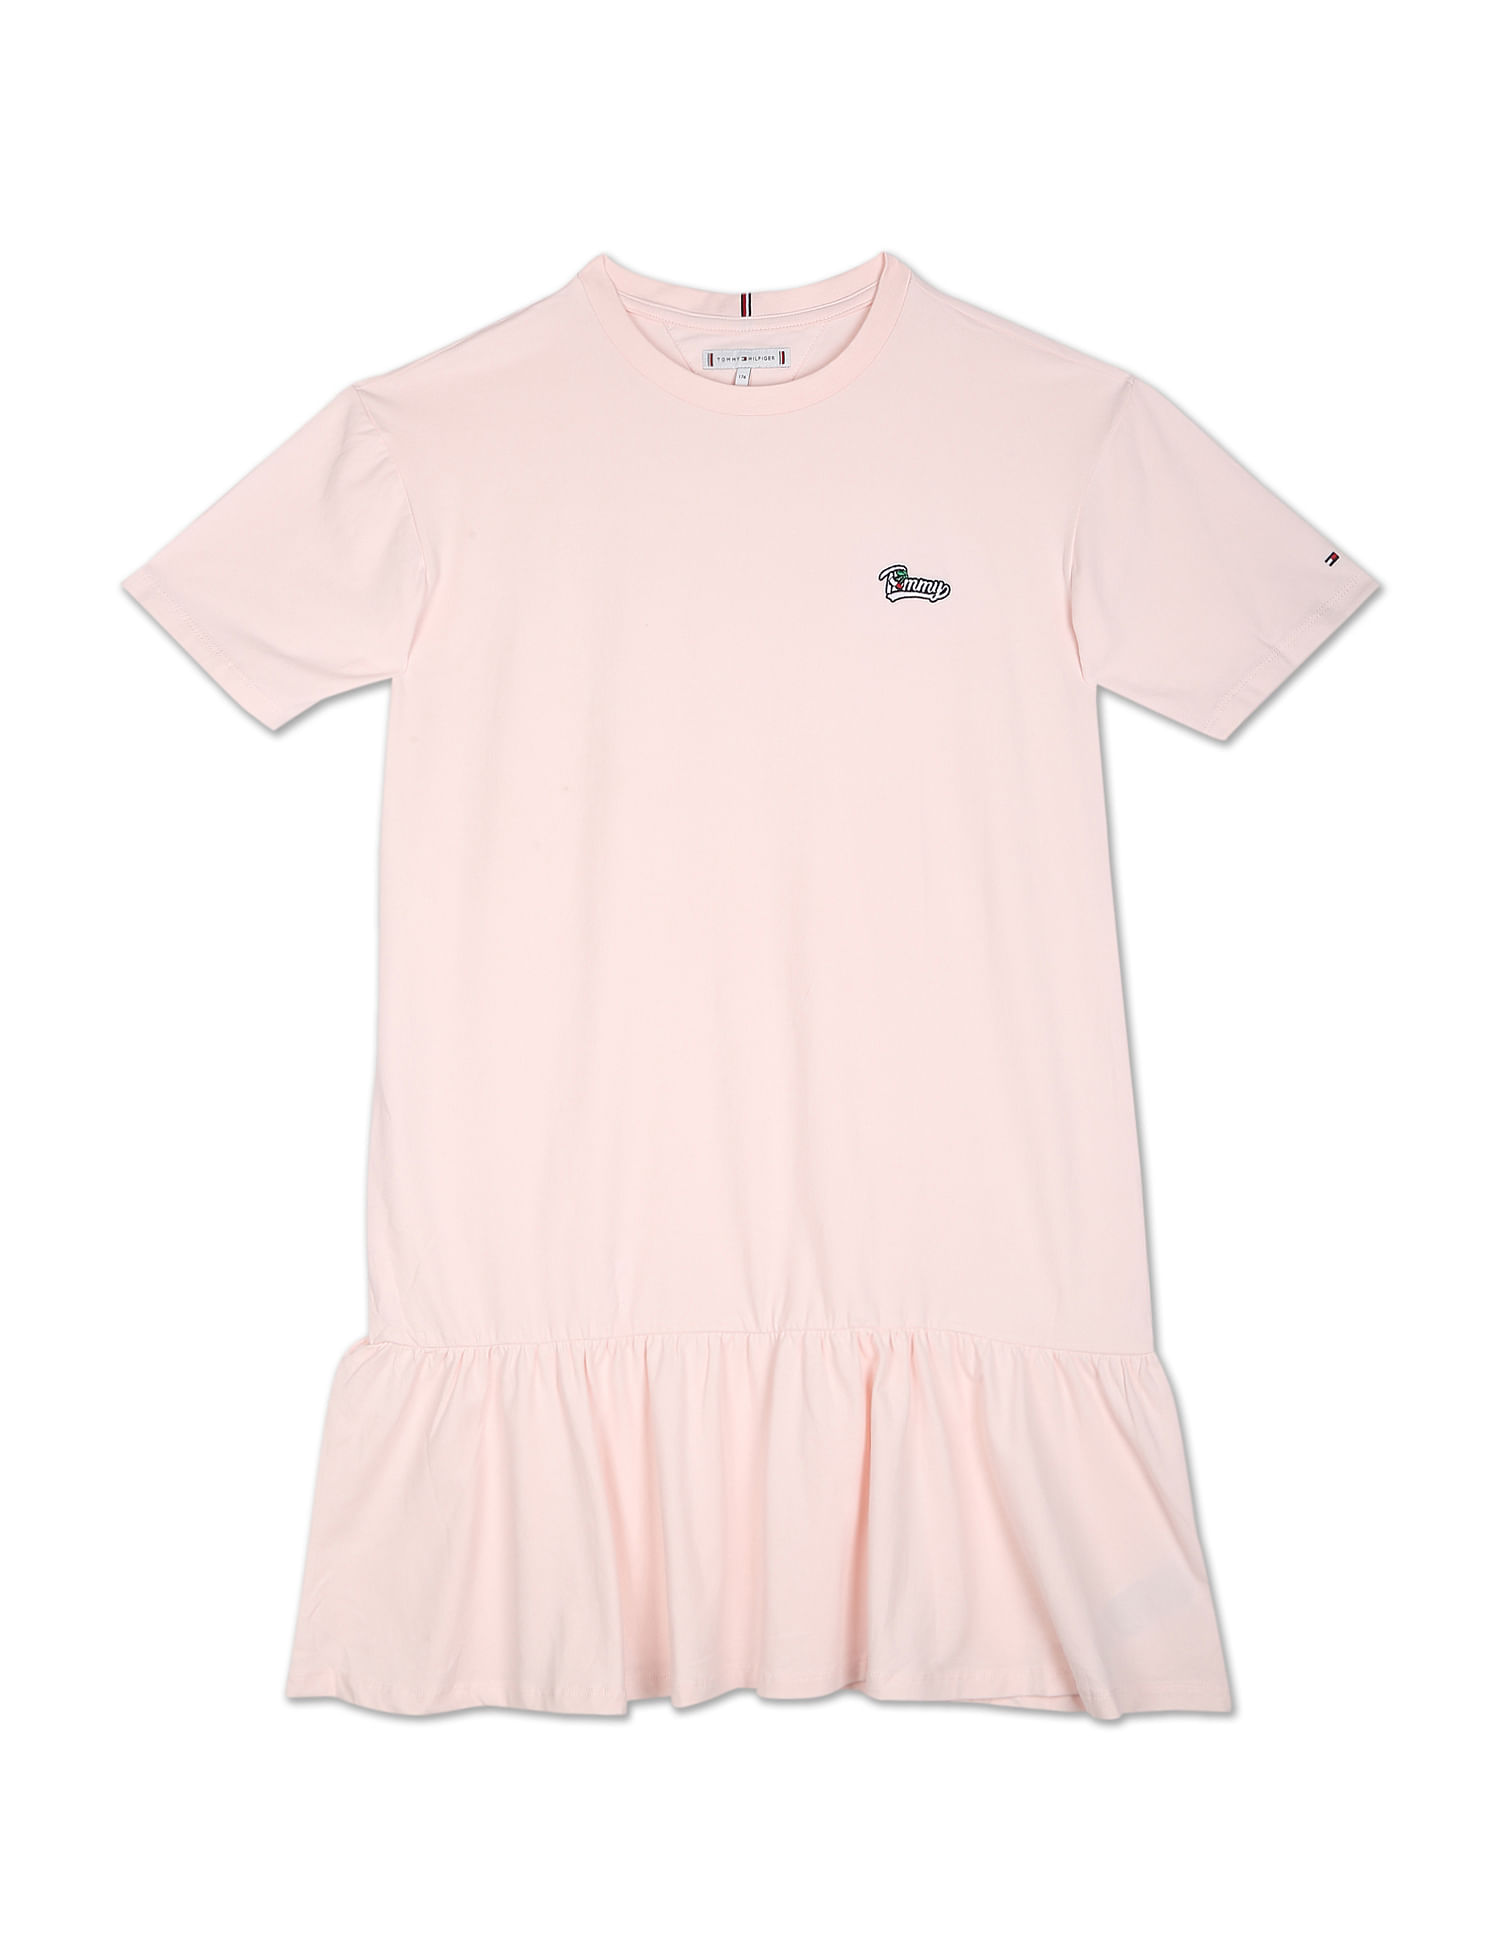 Buy Printmate Boys and Girls Maamu Ki Jaan Kids Gifting Cotton Yellow Round  Neck Unisex Full Sleeve T-Shirt Dress at Amazon.in